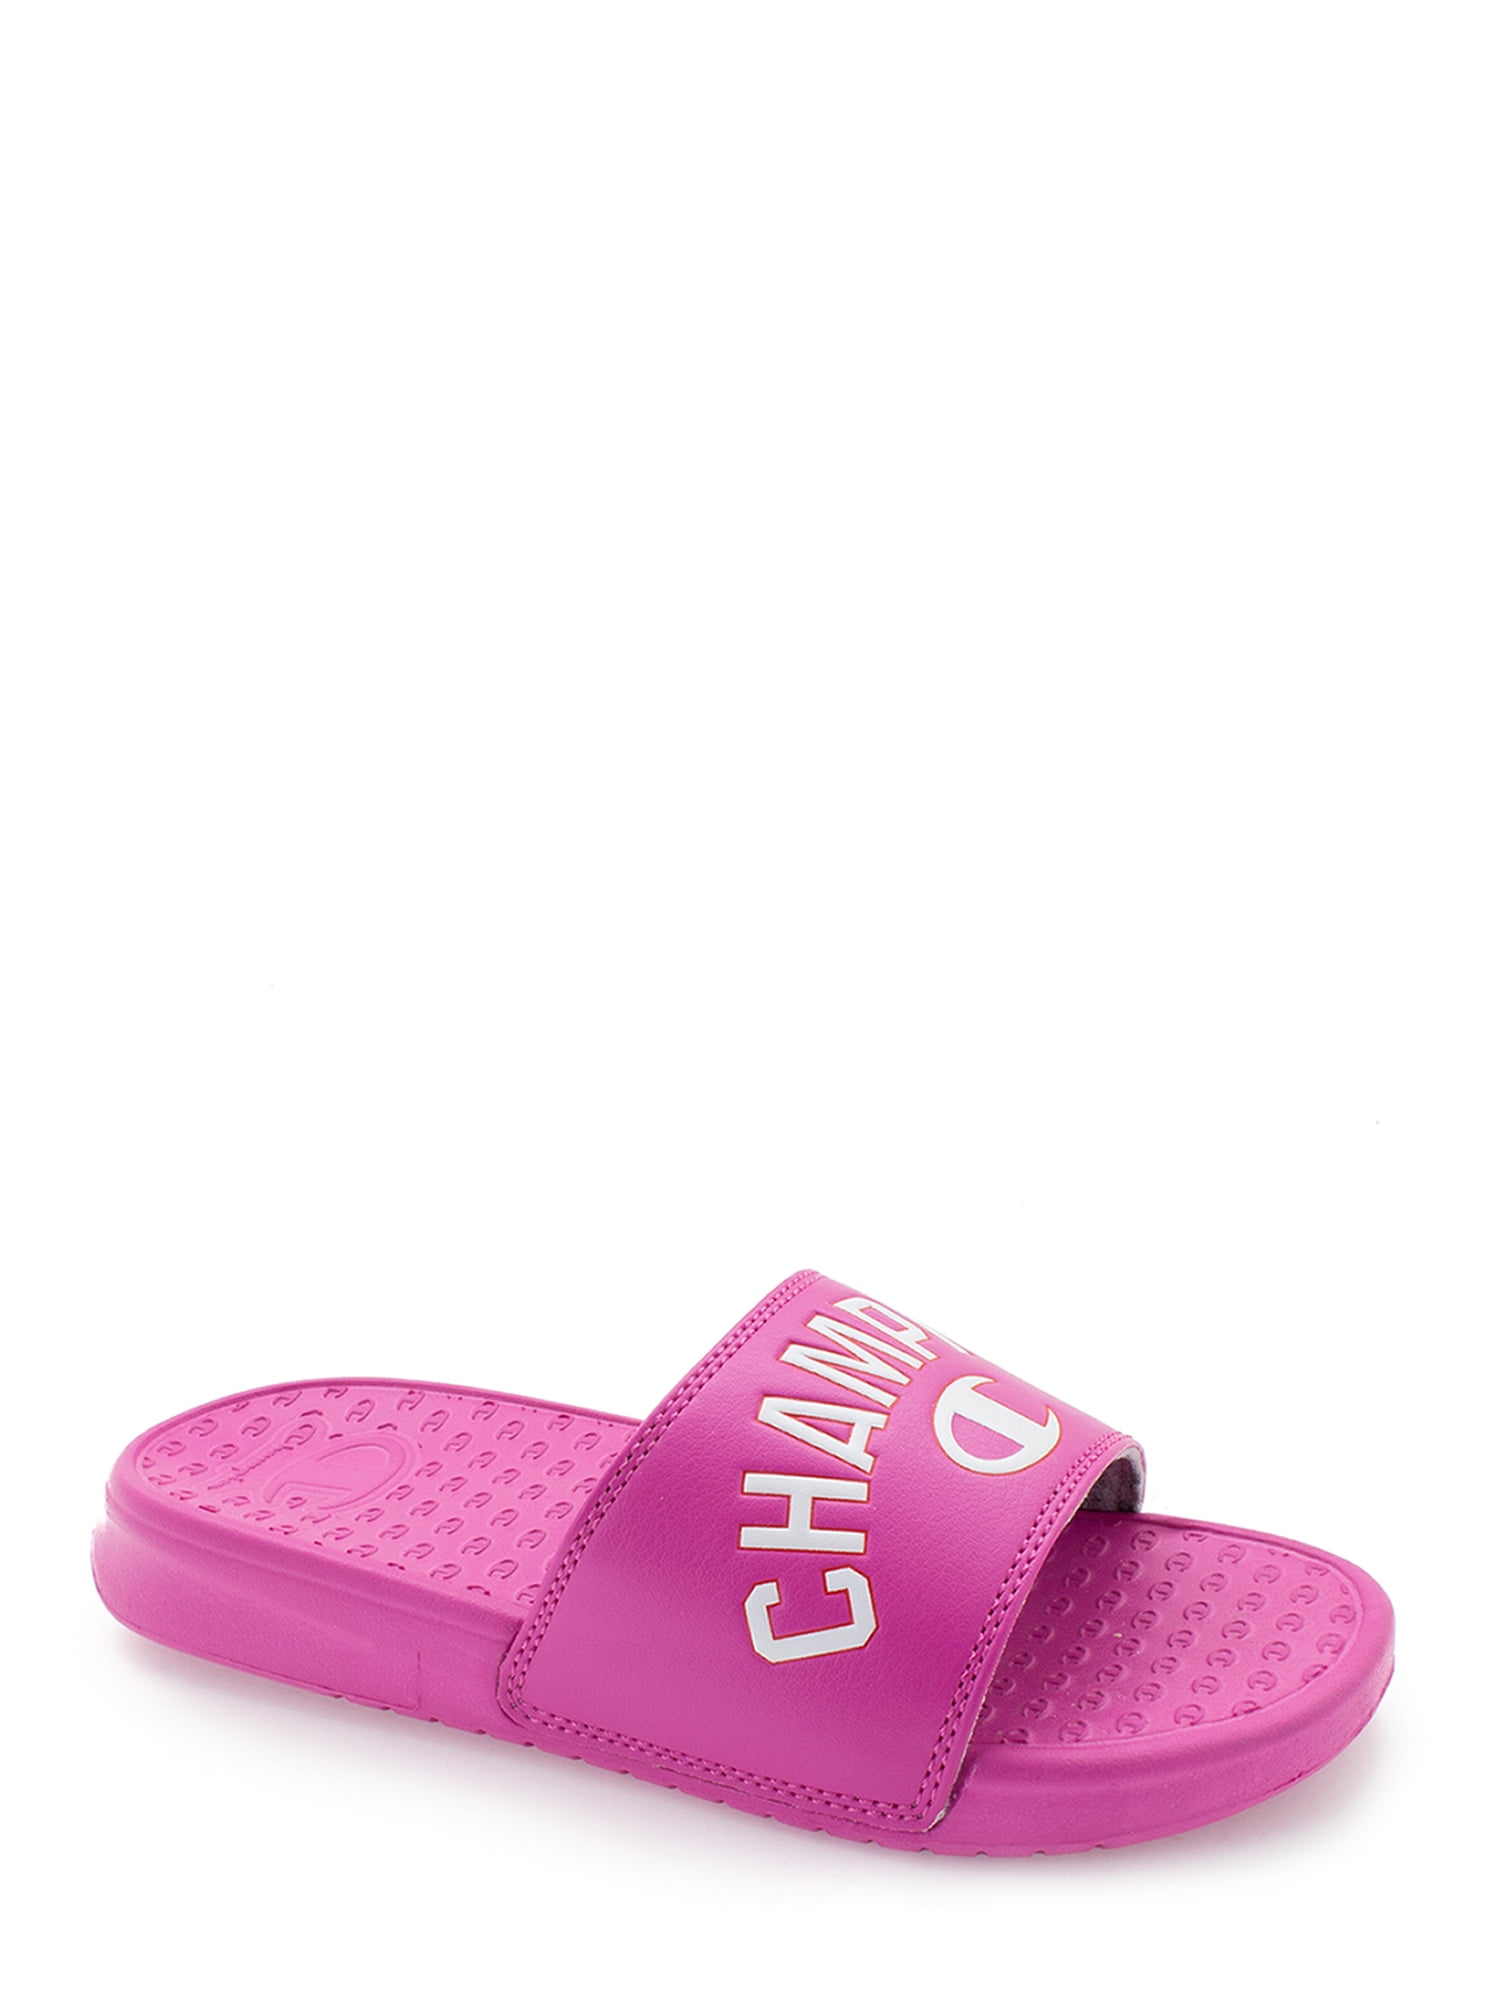 champion pink sandals